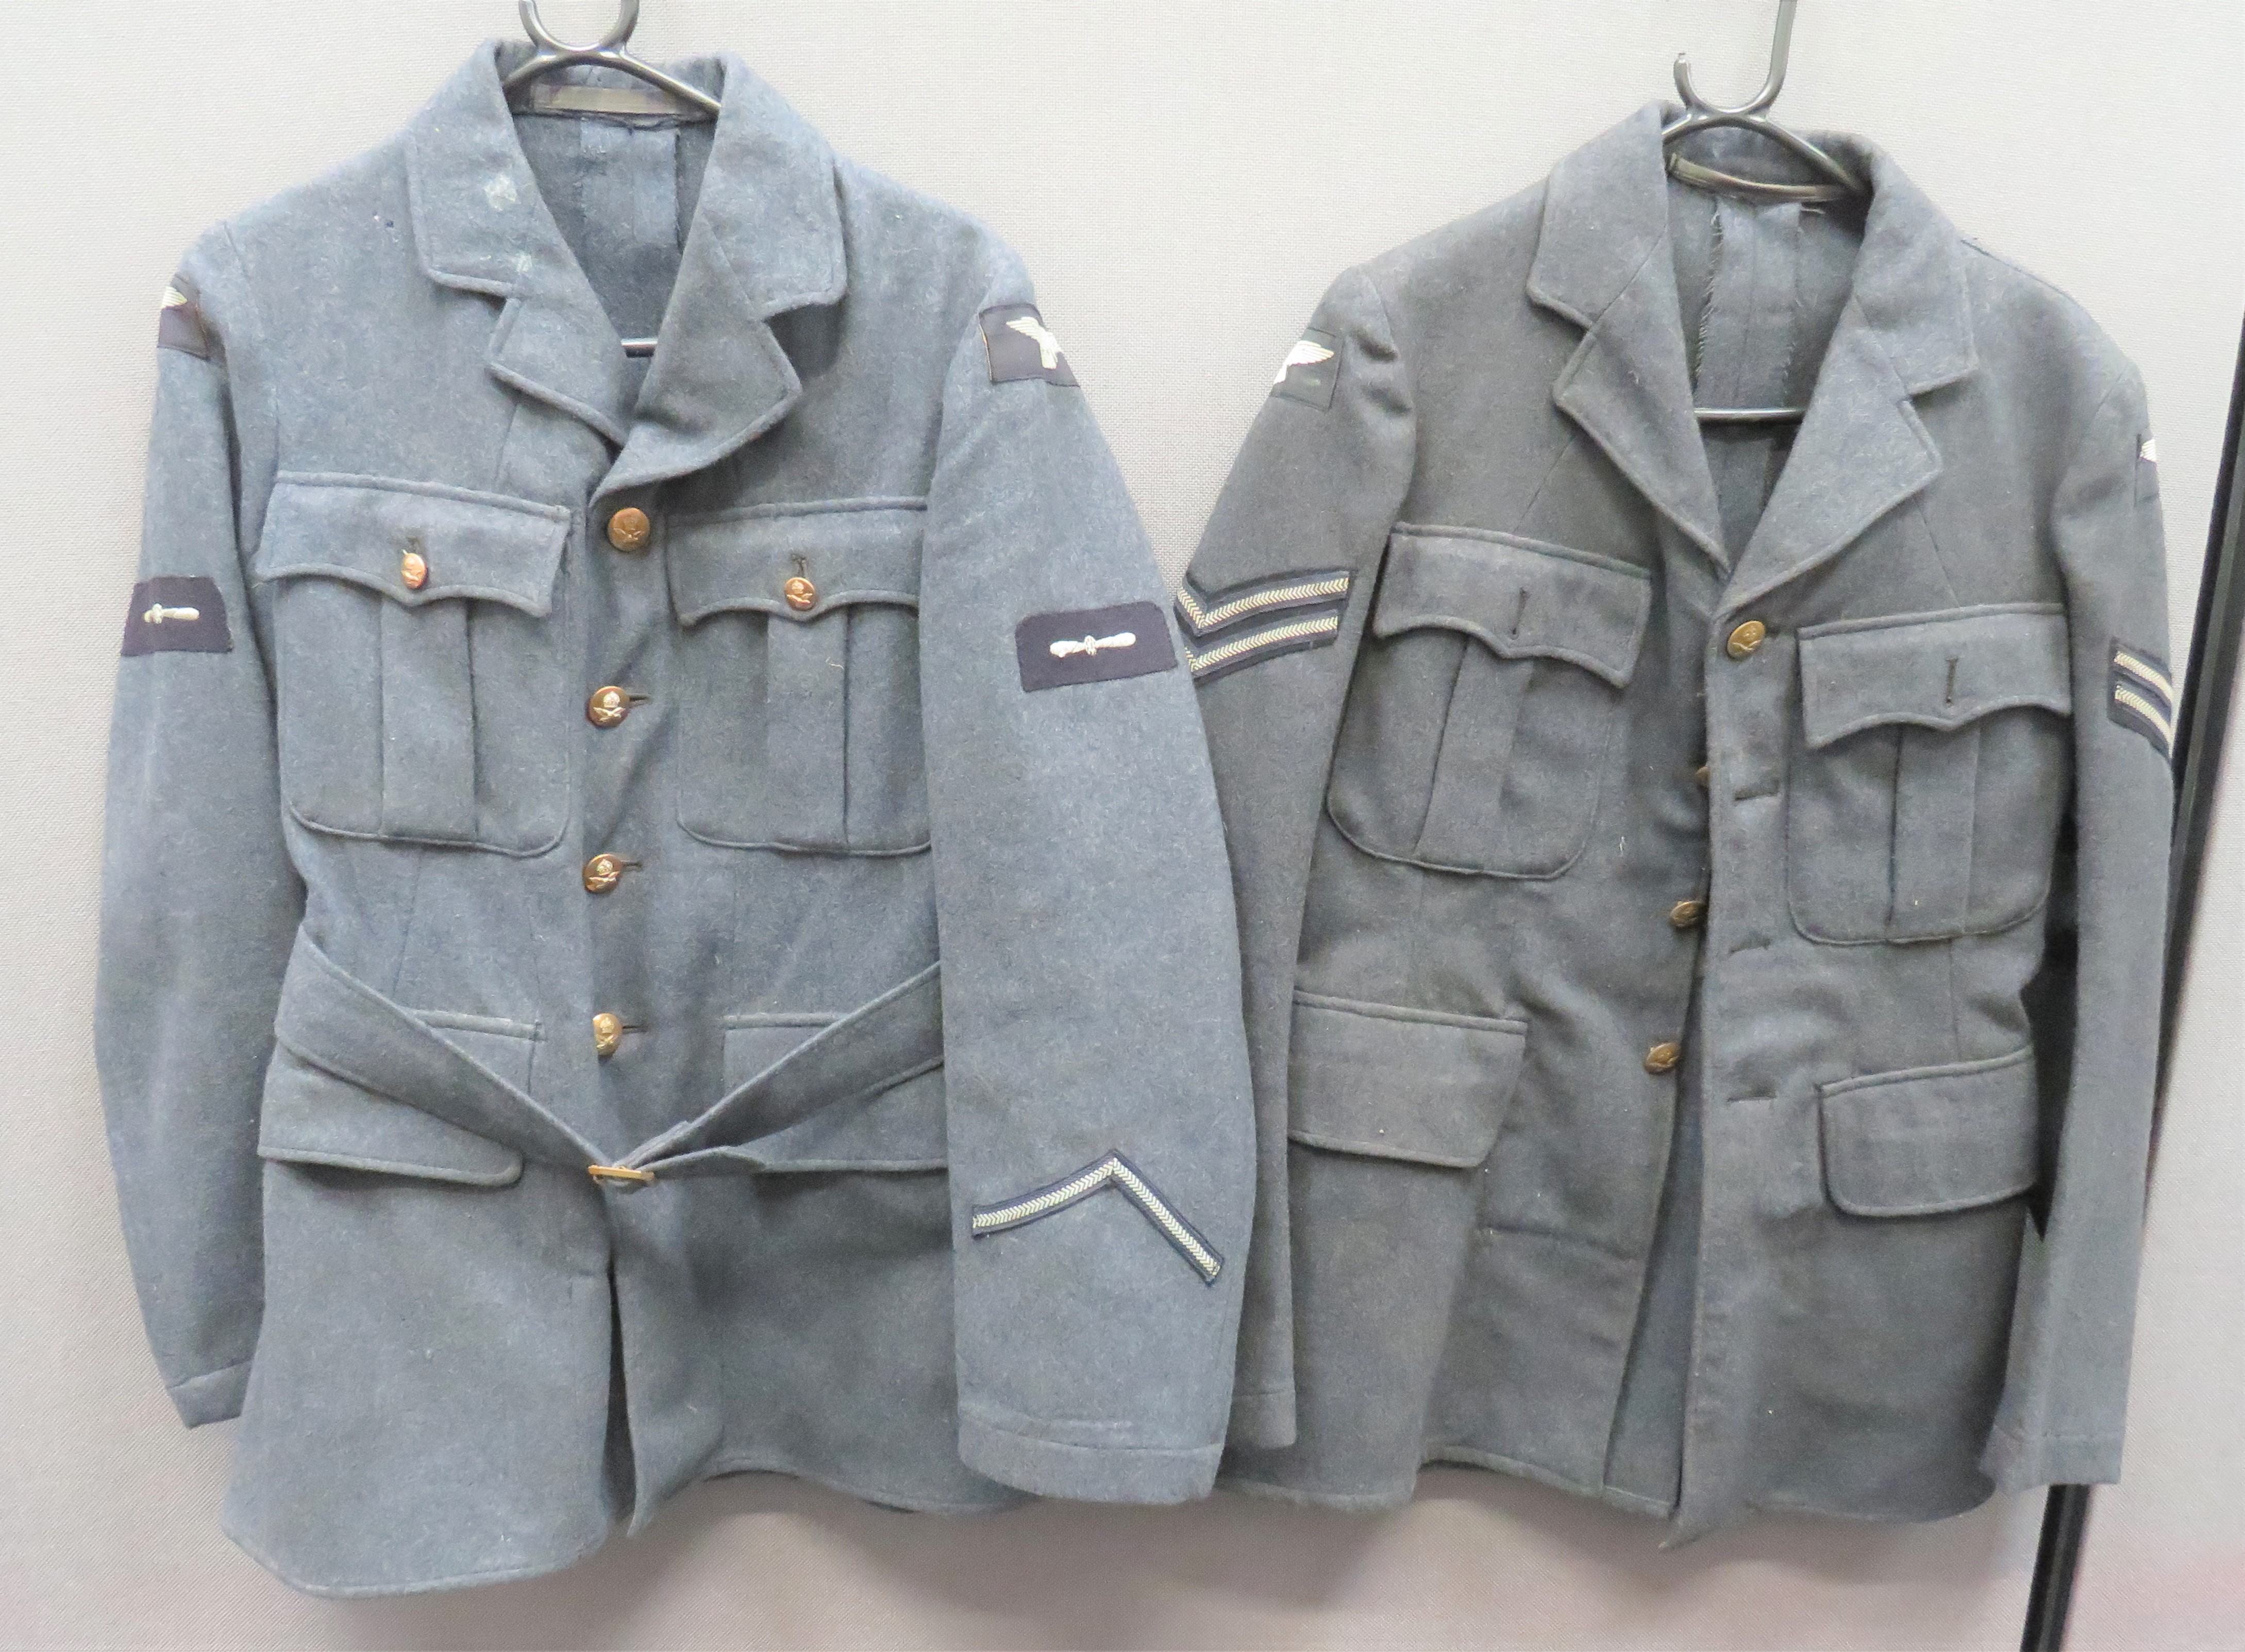 Two RAF Airman Service Dress Jackets blue grey woollen, single breasted, open collar tunics.